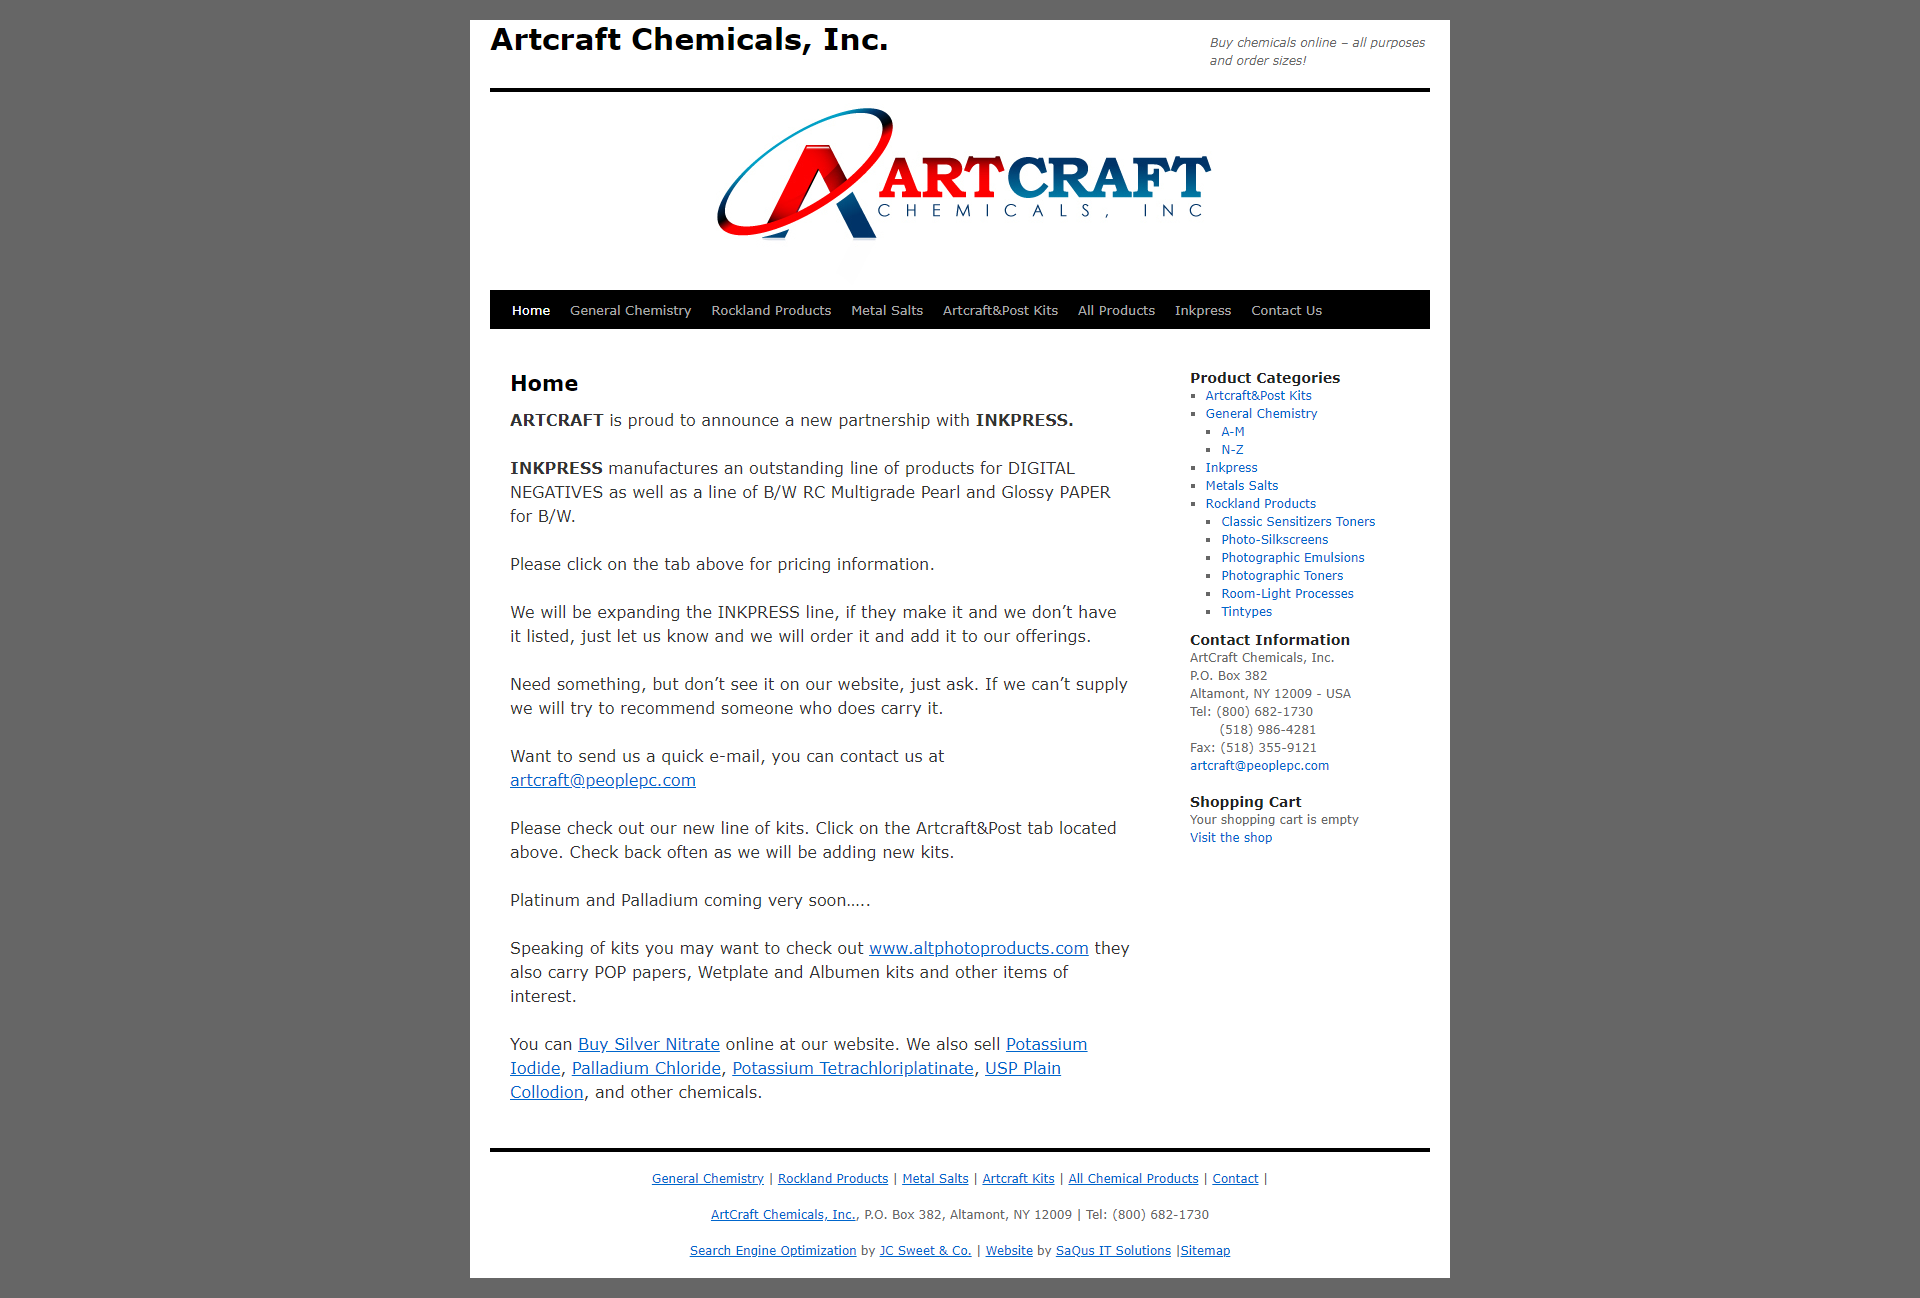 Artcraft Chemicals web site screenshot